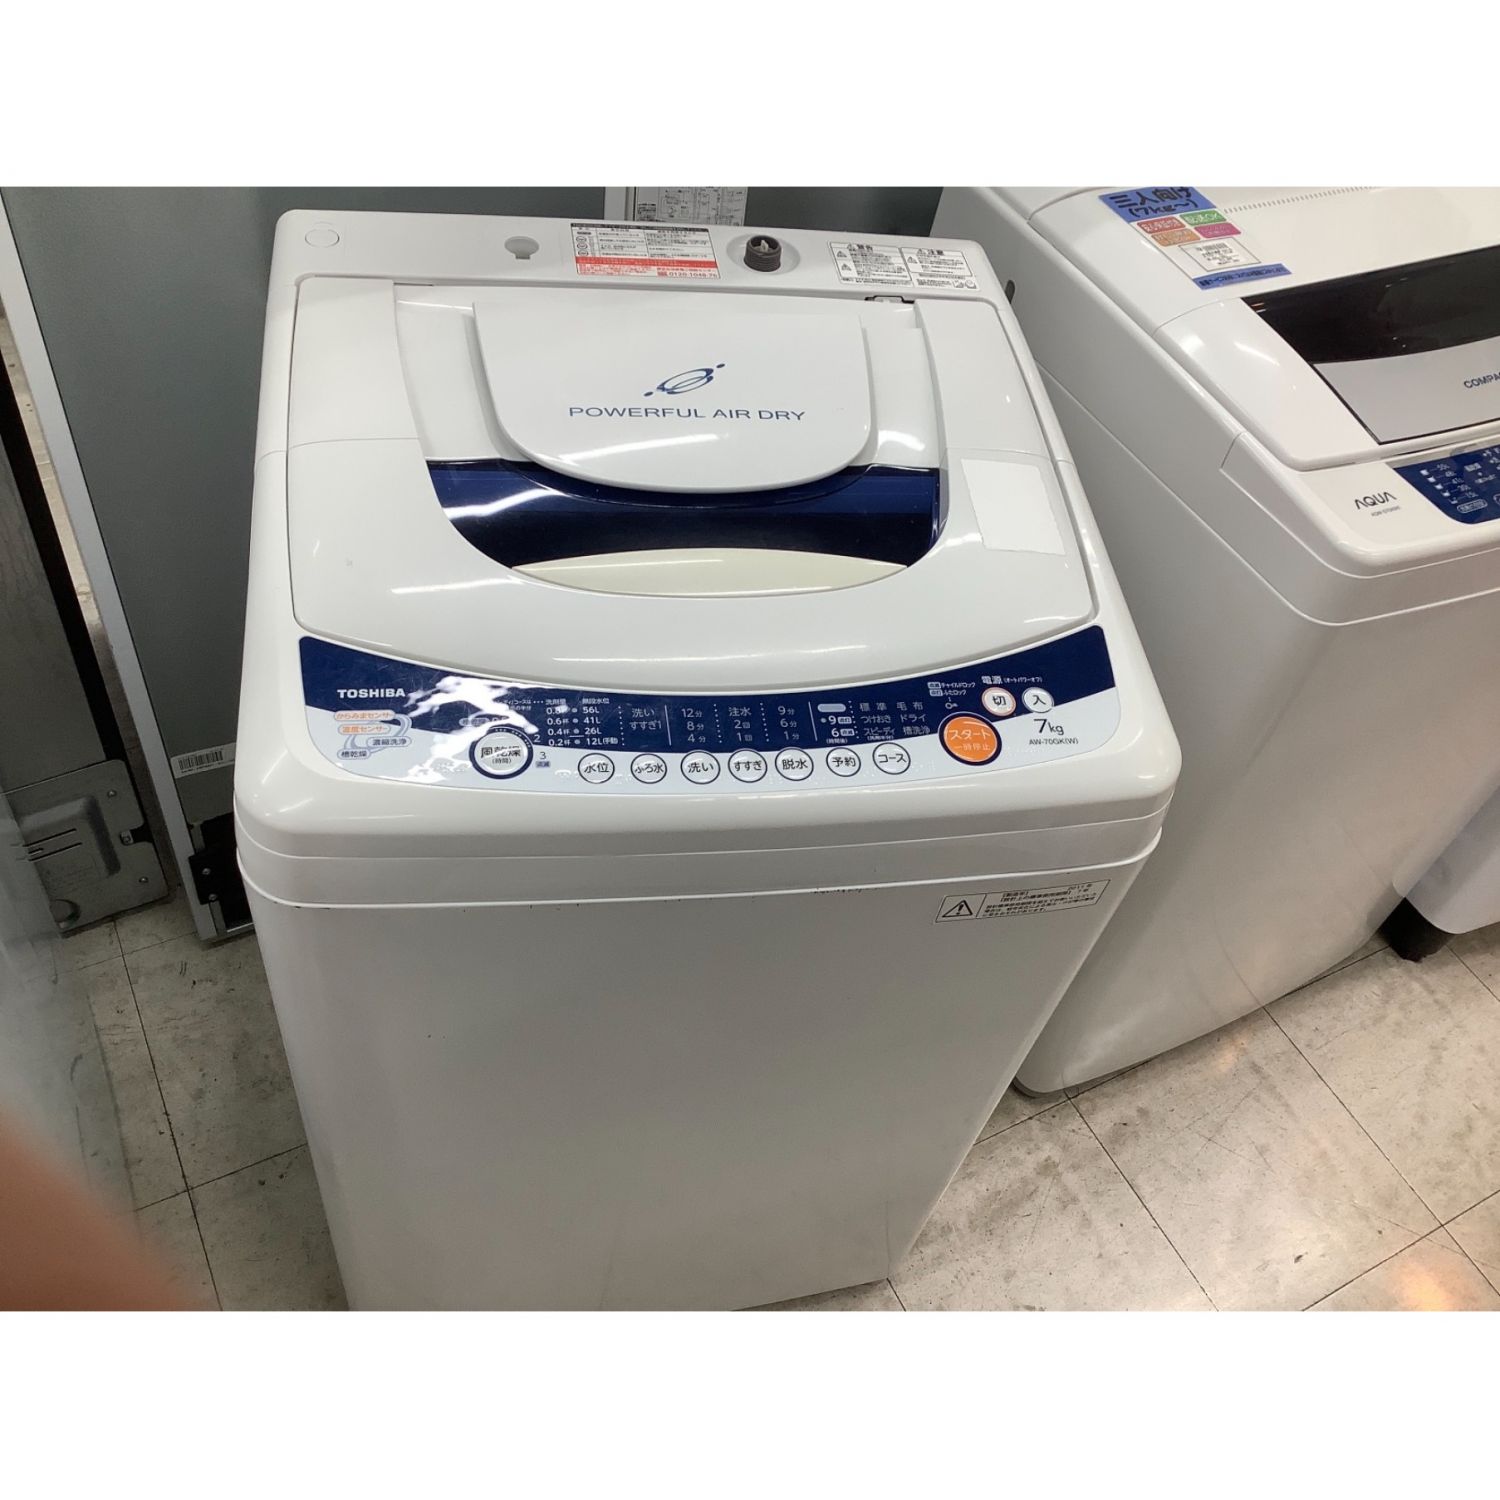 TOSHIBA (トウシバ) 全自動洗濯機 7.0kg AW-70GK(W) 2011年製 50Hz 